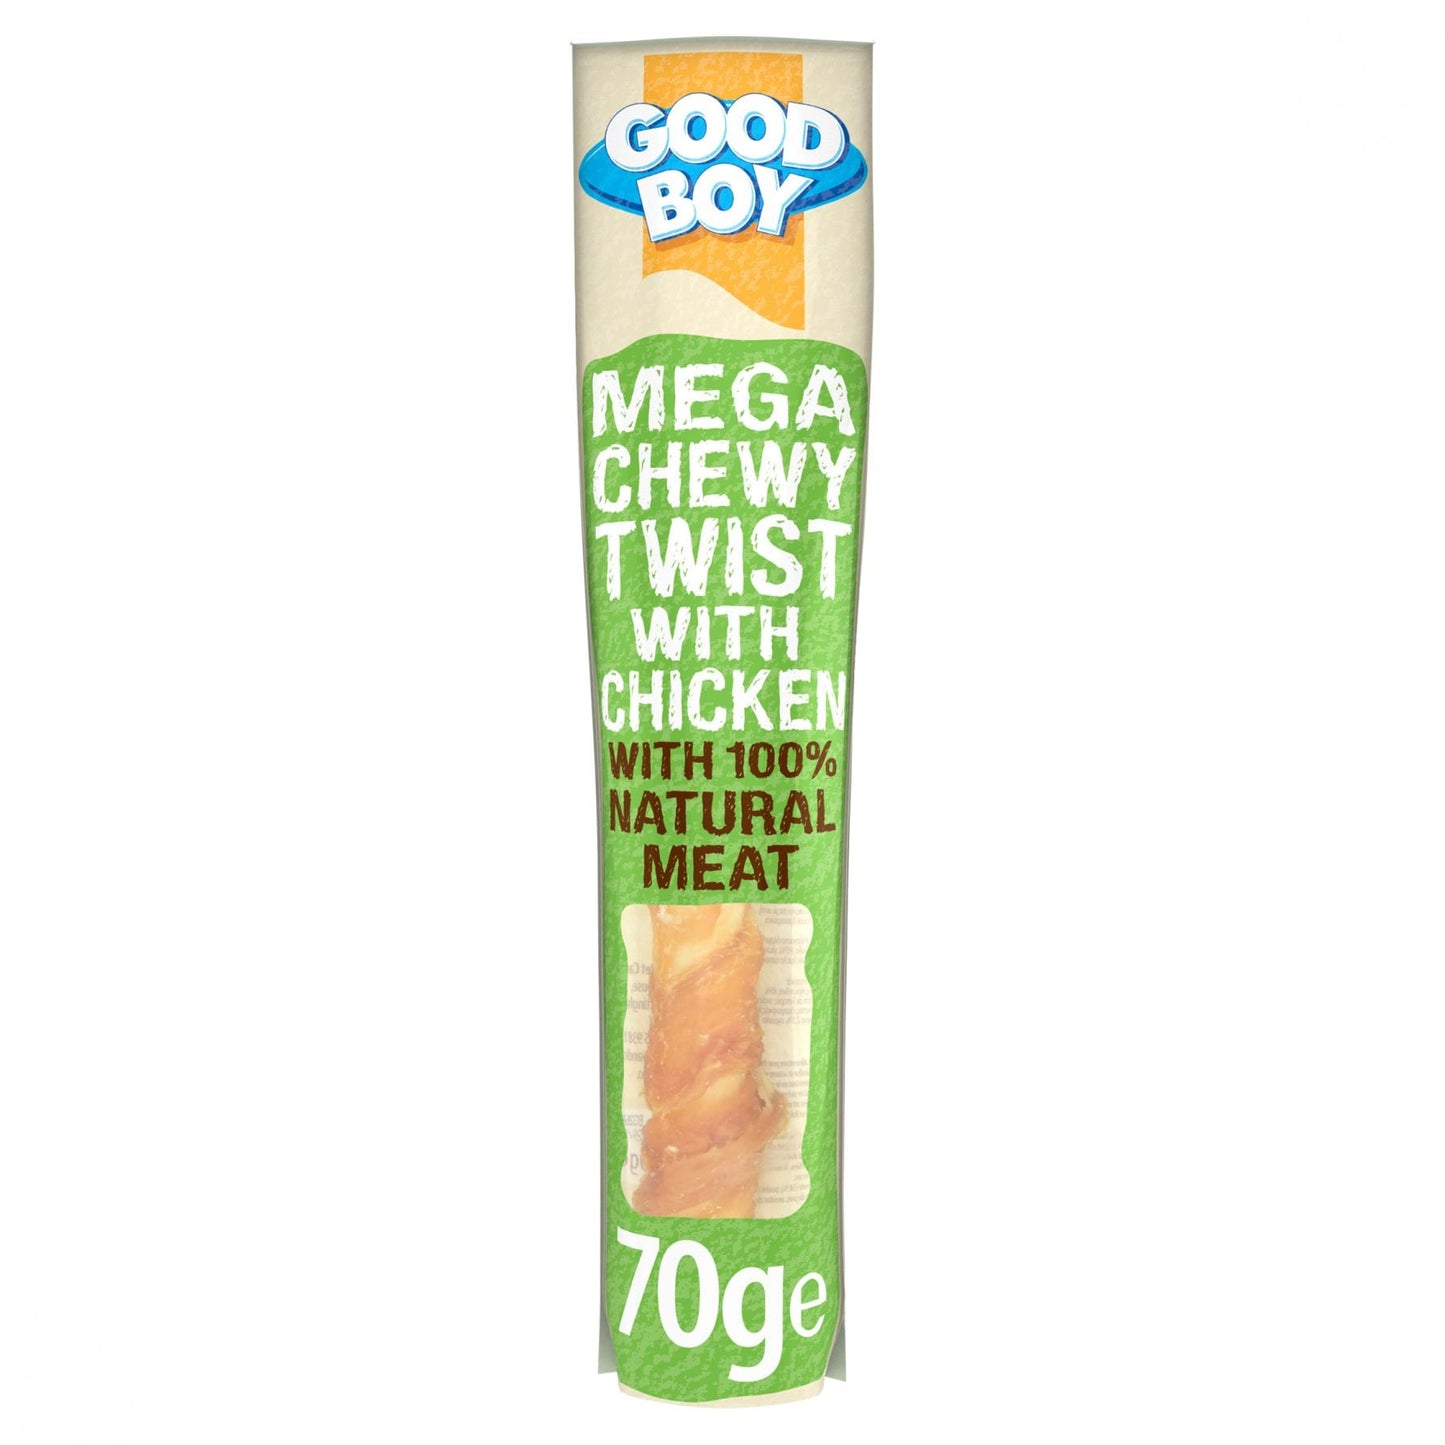 Good Boy Pawsley & Co Mega Chewy Twist with Chicken Dog Treats 70g